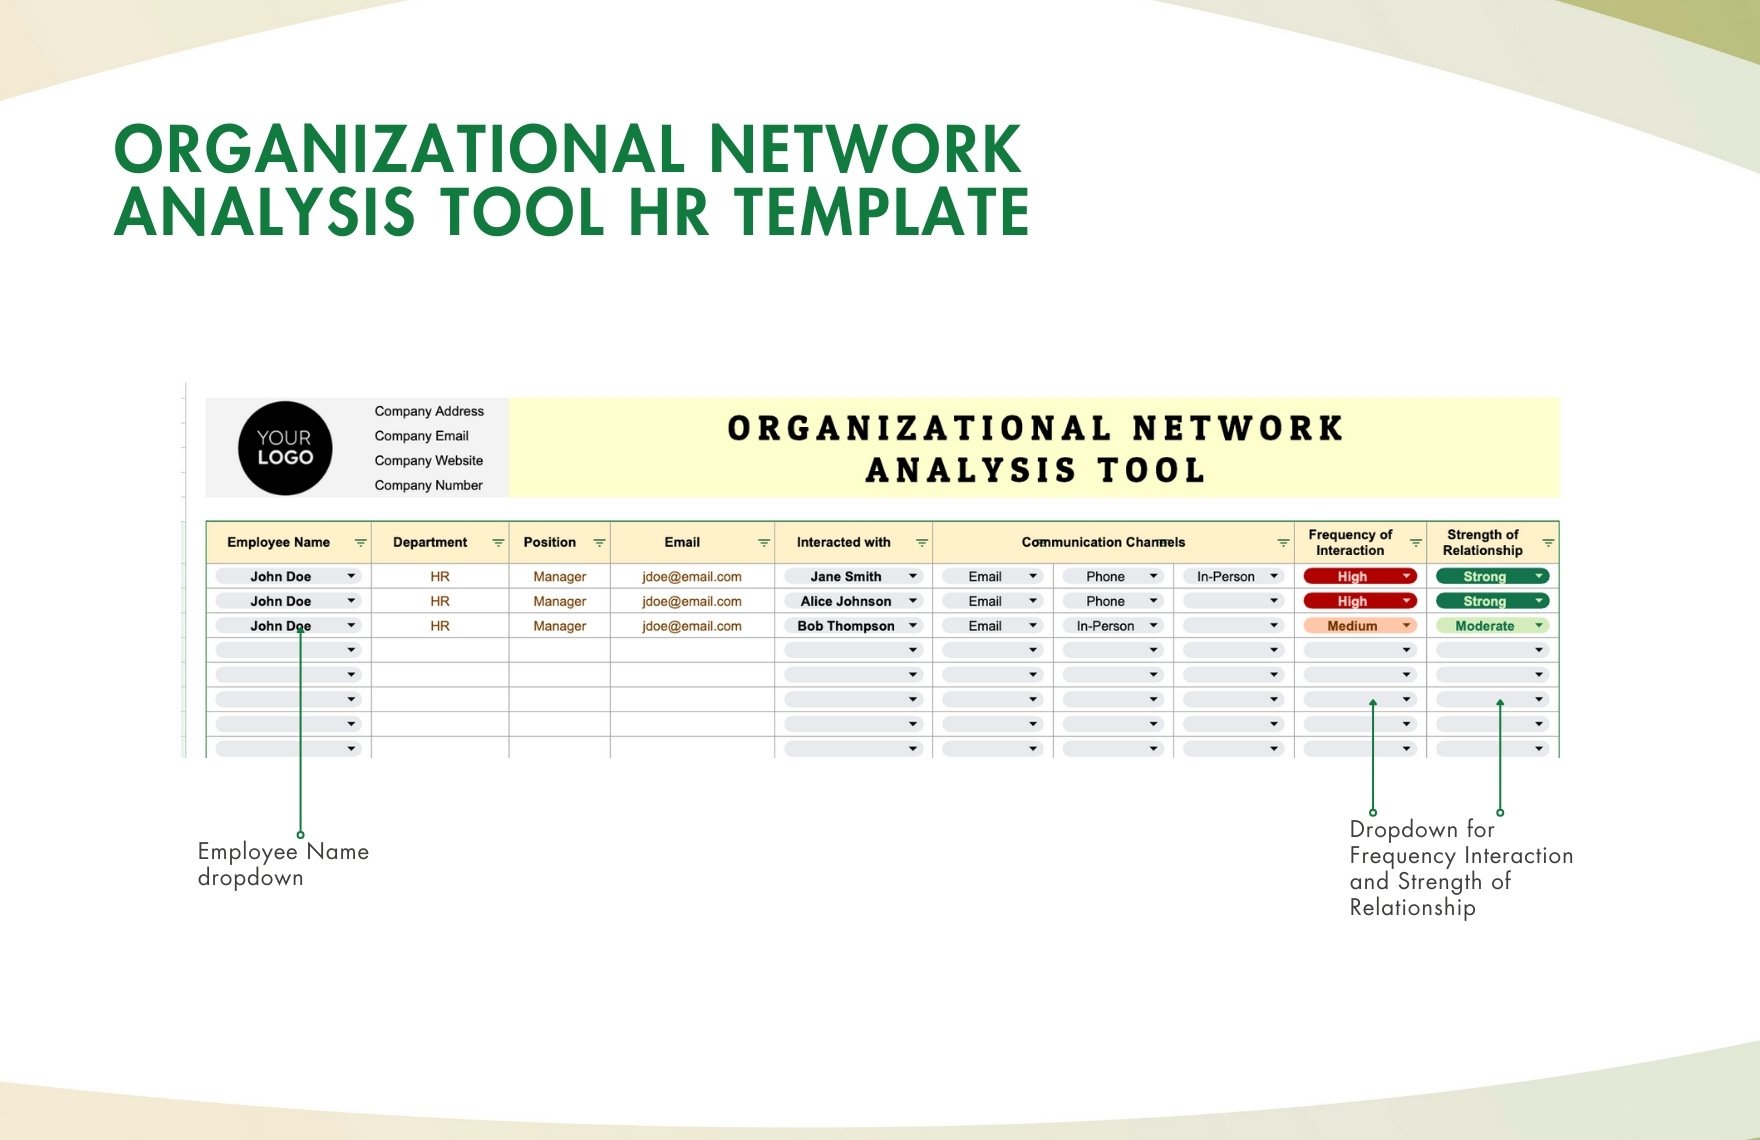 Organizational Network Analysis Tool HR Template